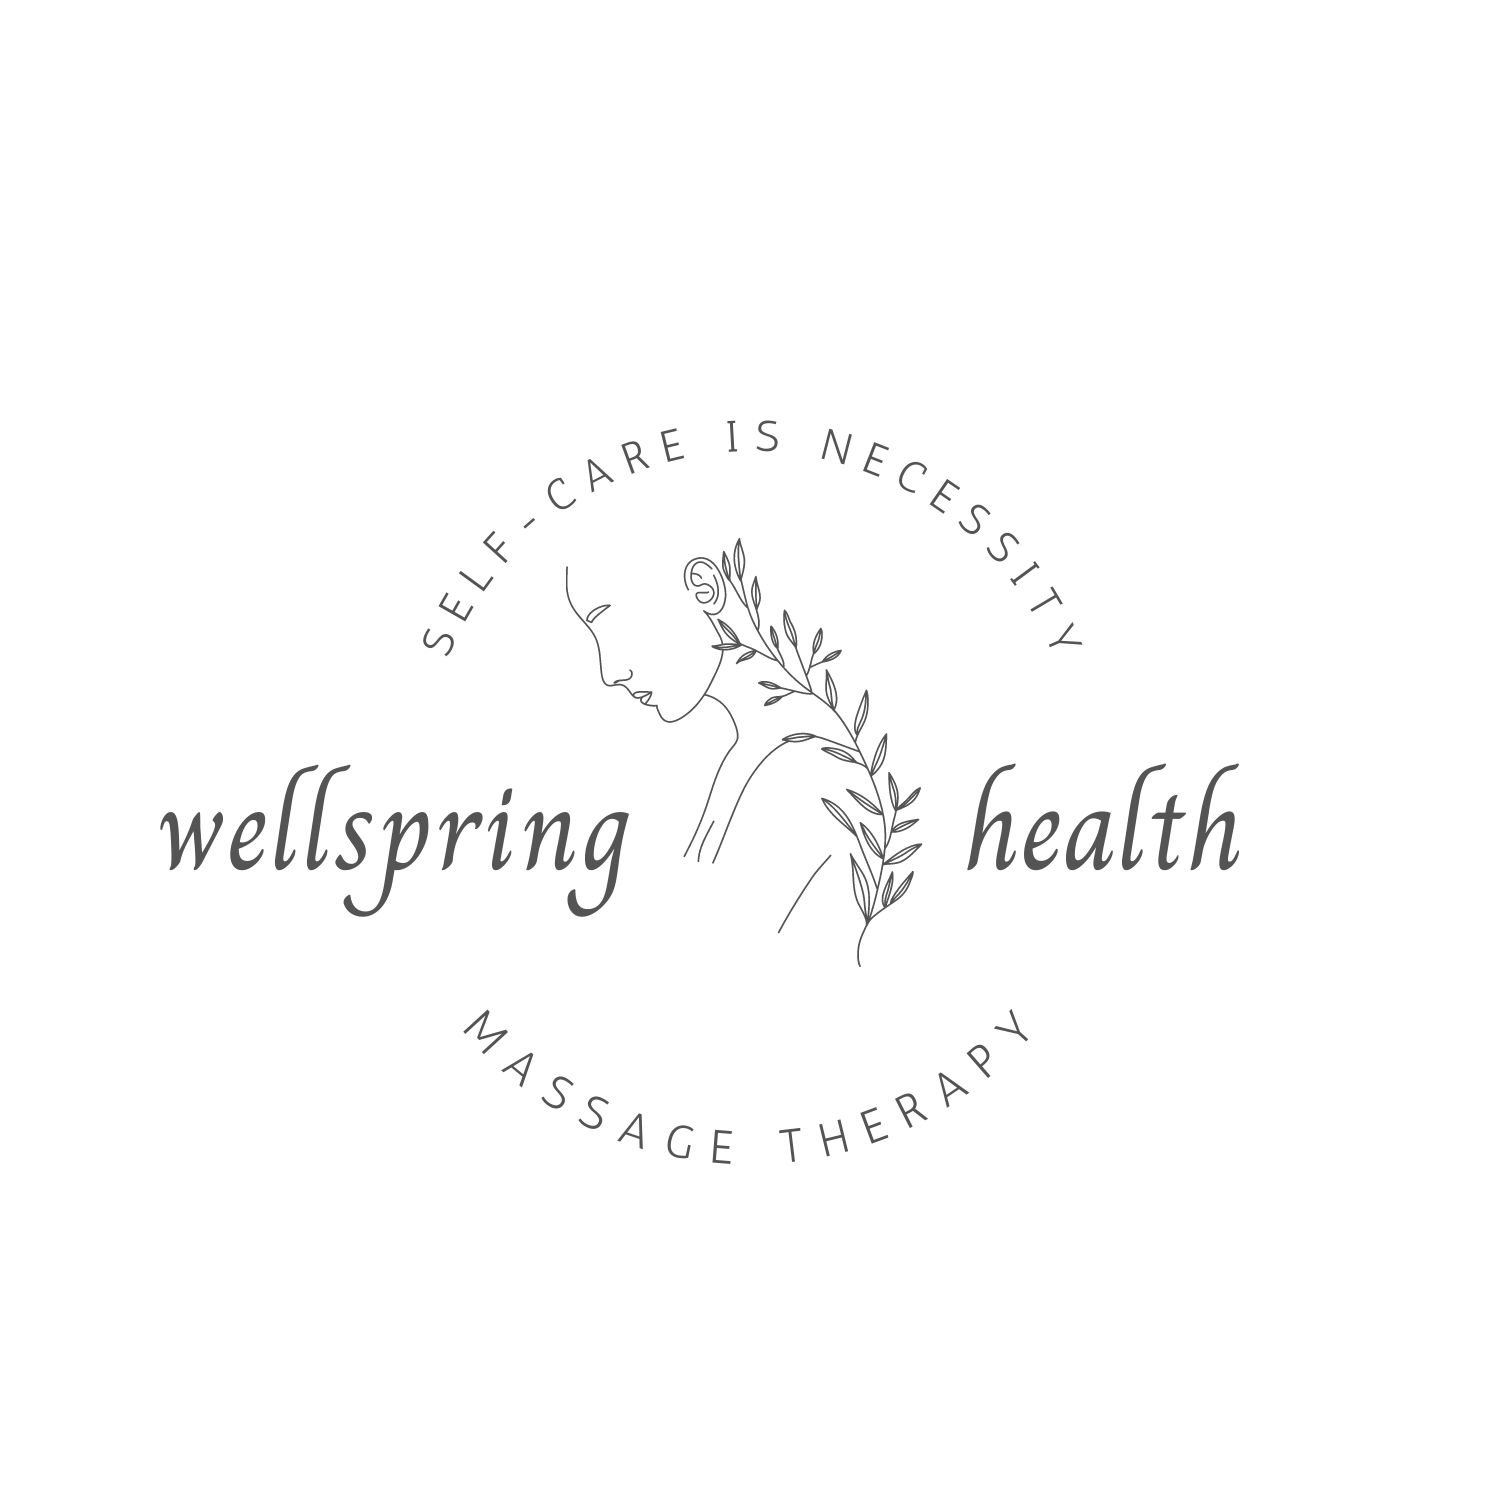 Wellspring Health